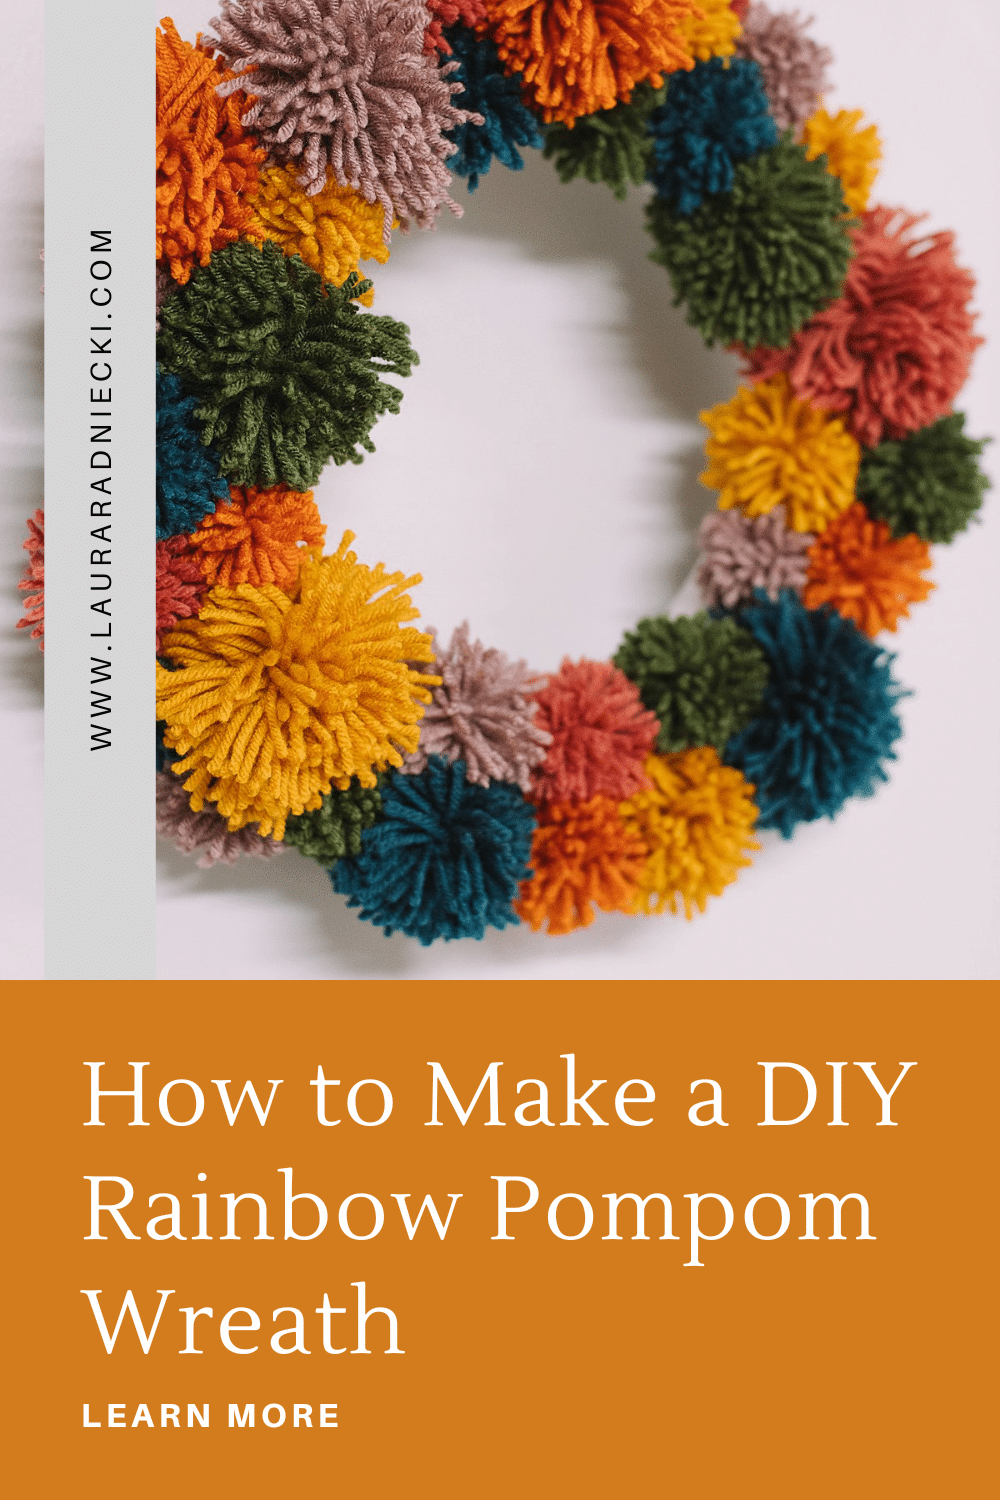 How to Make a DIY Rainbow Pompom Wreath with Rainbow Yarn